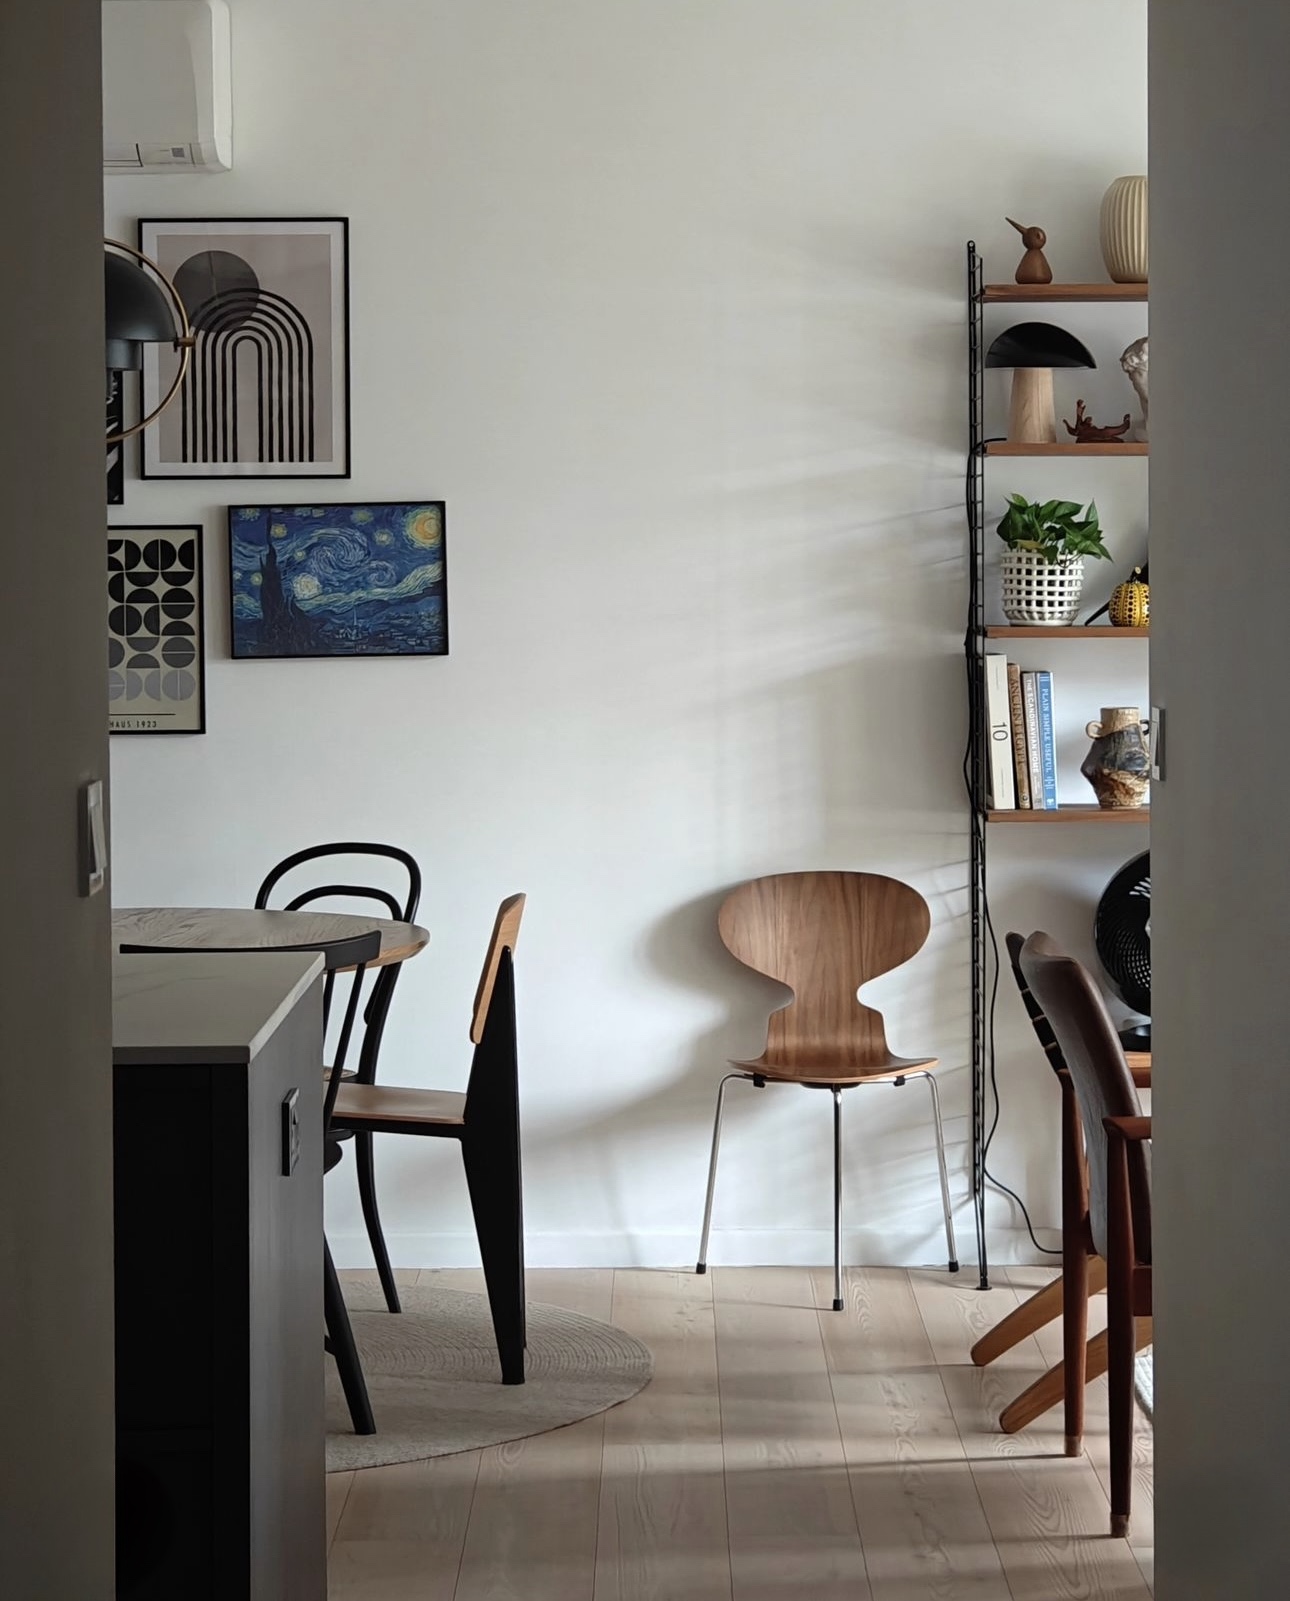 Scandinavian, minimalist home with neutral, earthy tones.